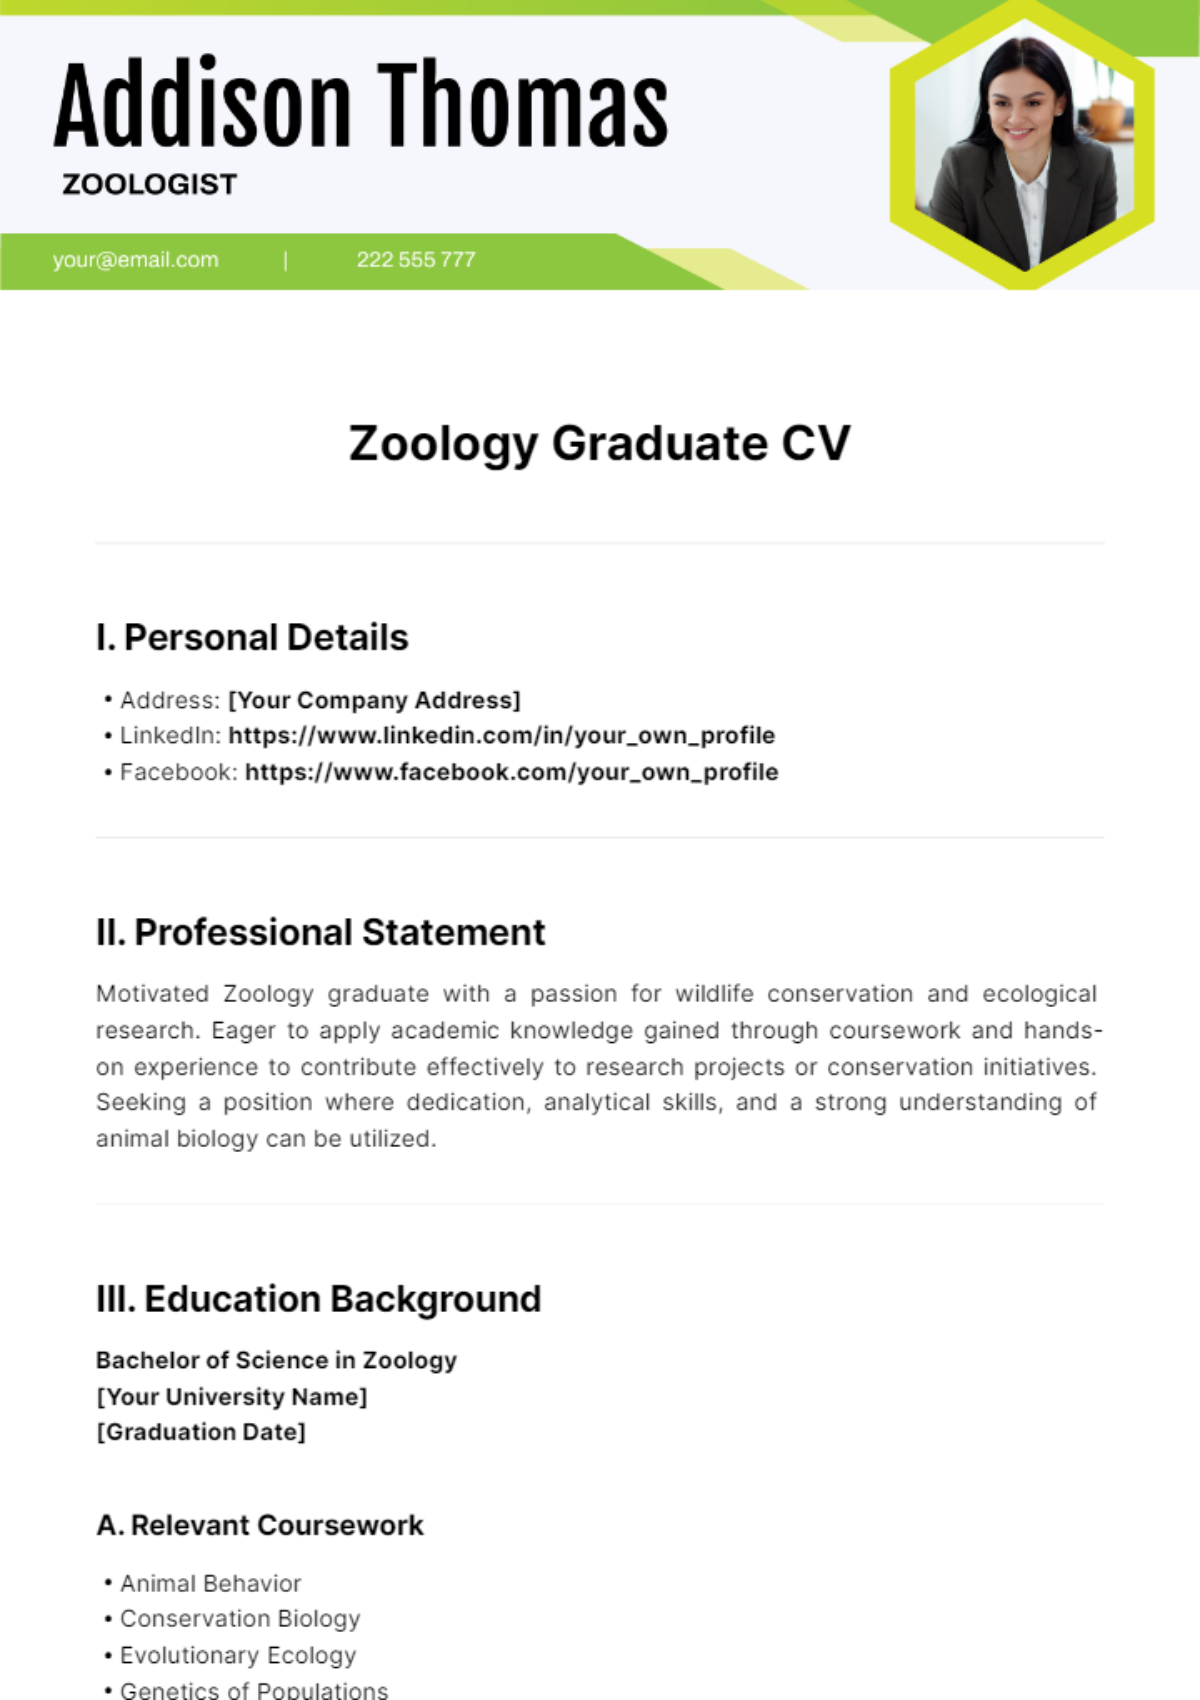 Zoology Graduate CV Template